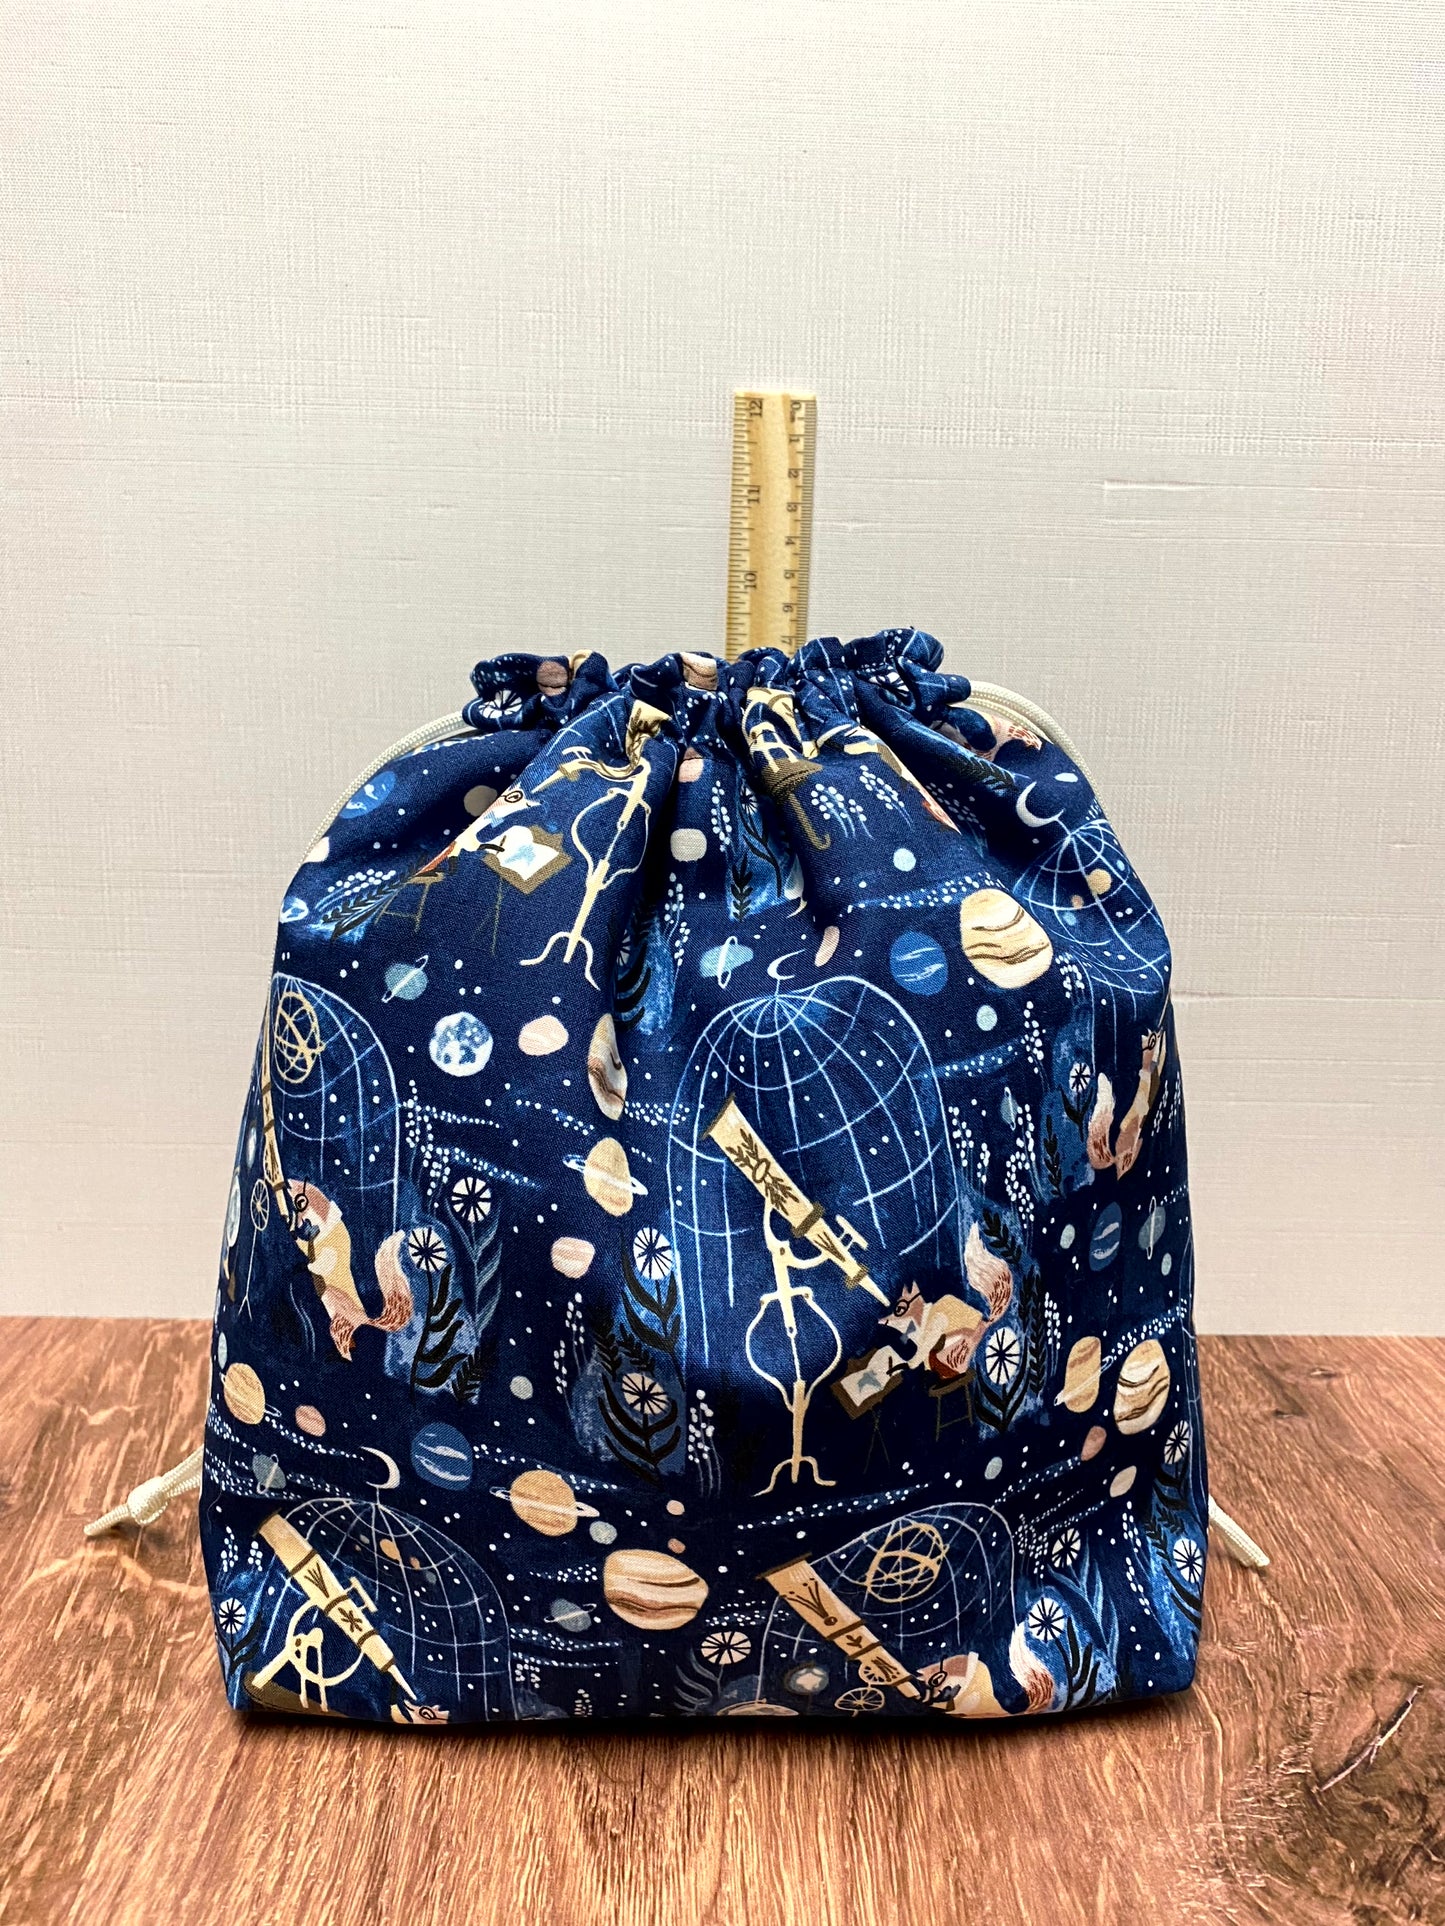 Celestial Fox Project Bag - Handmade - Drawstring Bag – Knitting Bag – Crochet Bag - Toy Sack – Cross Stitch Bag – Space - Telescope